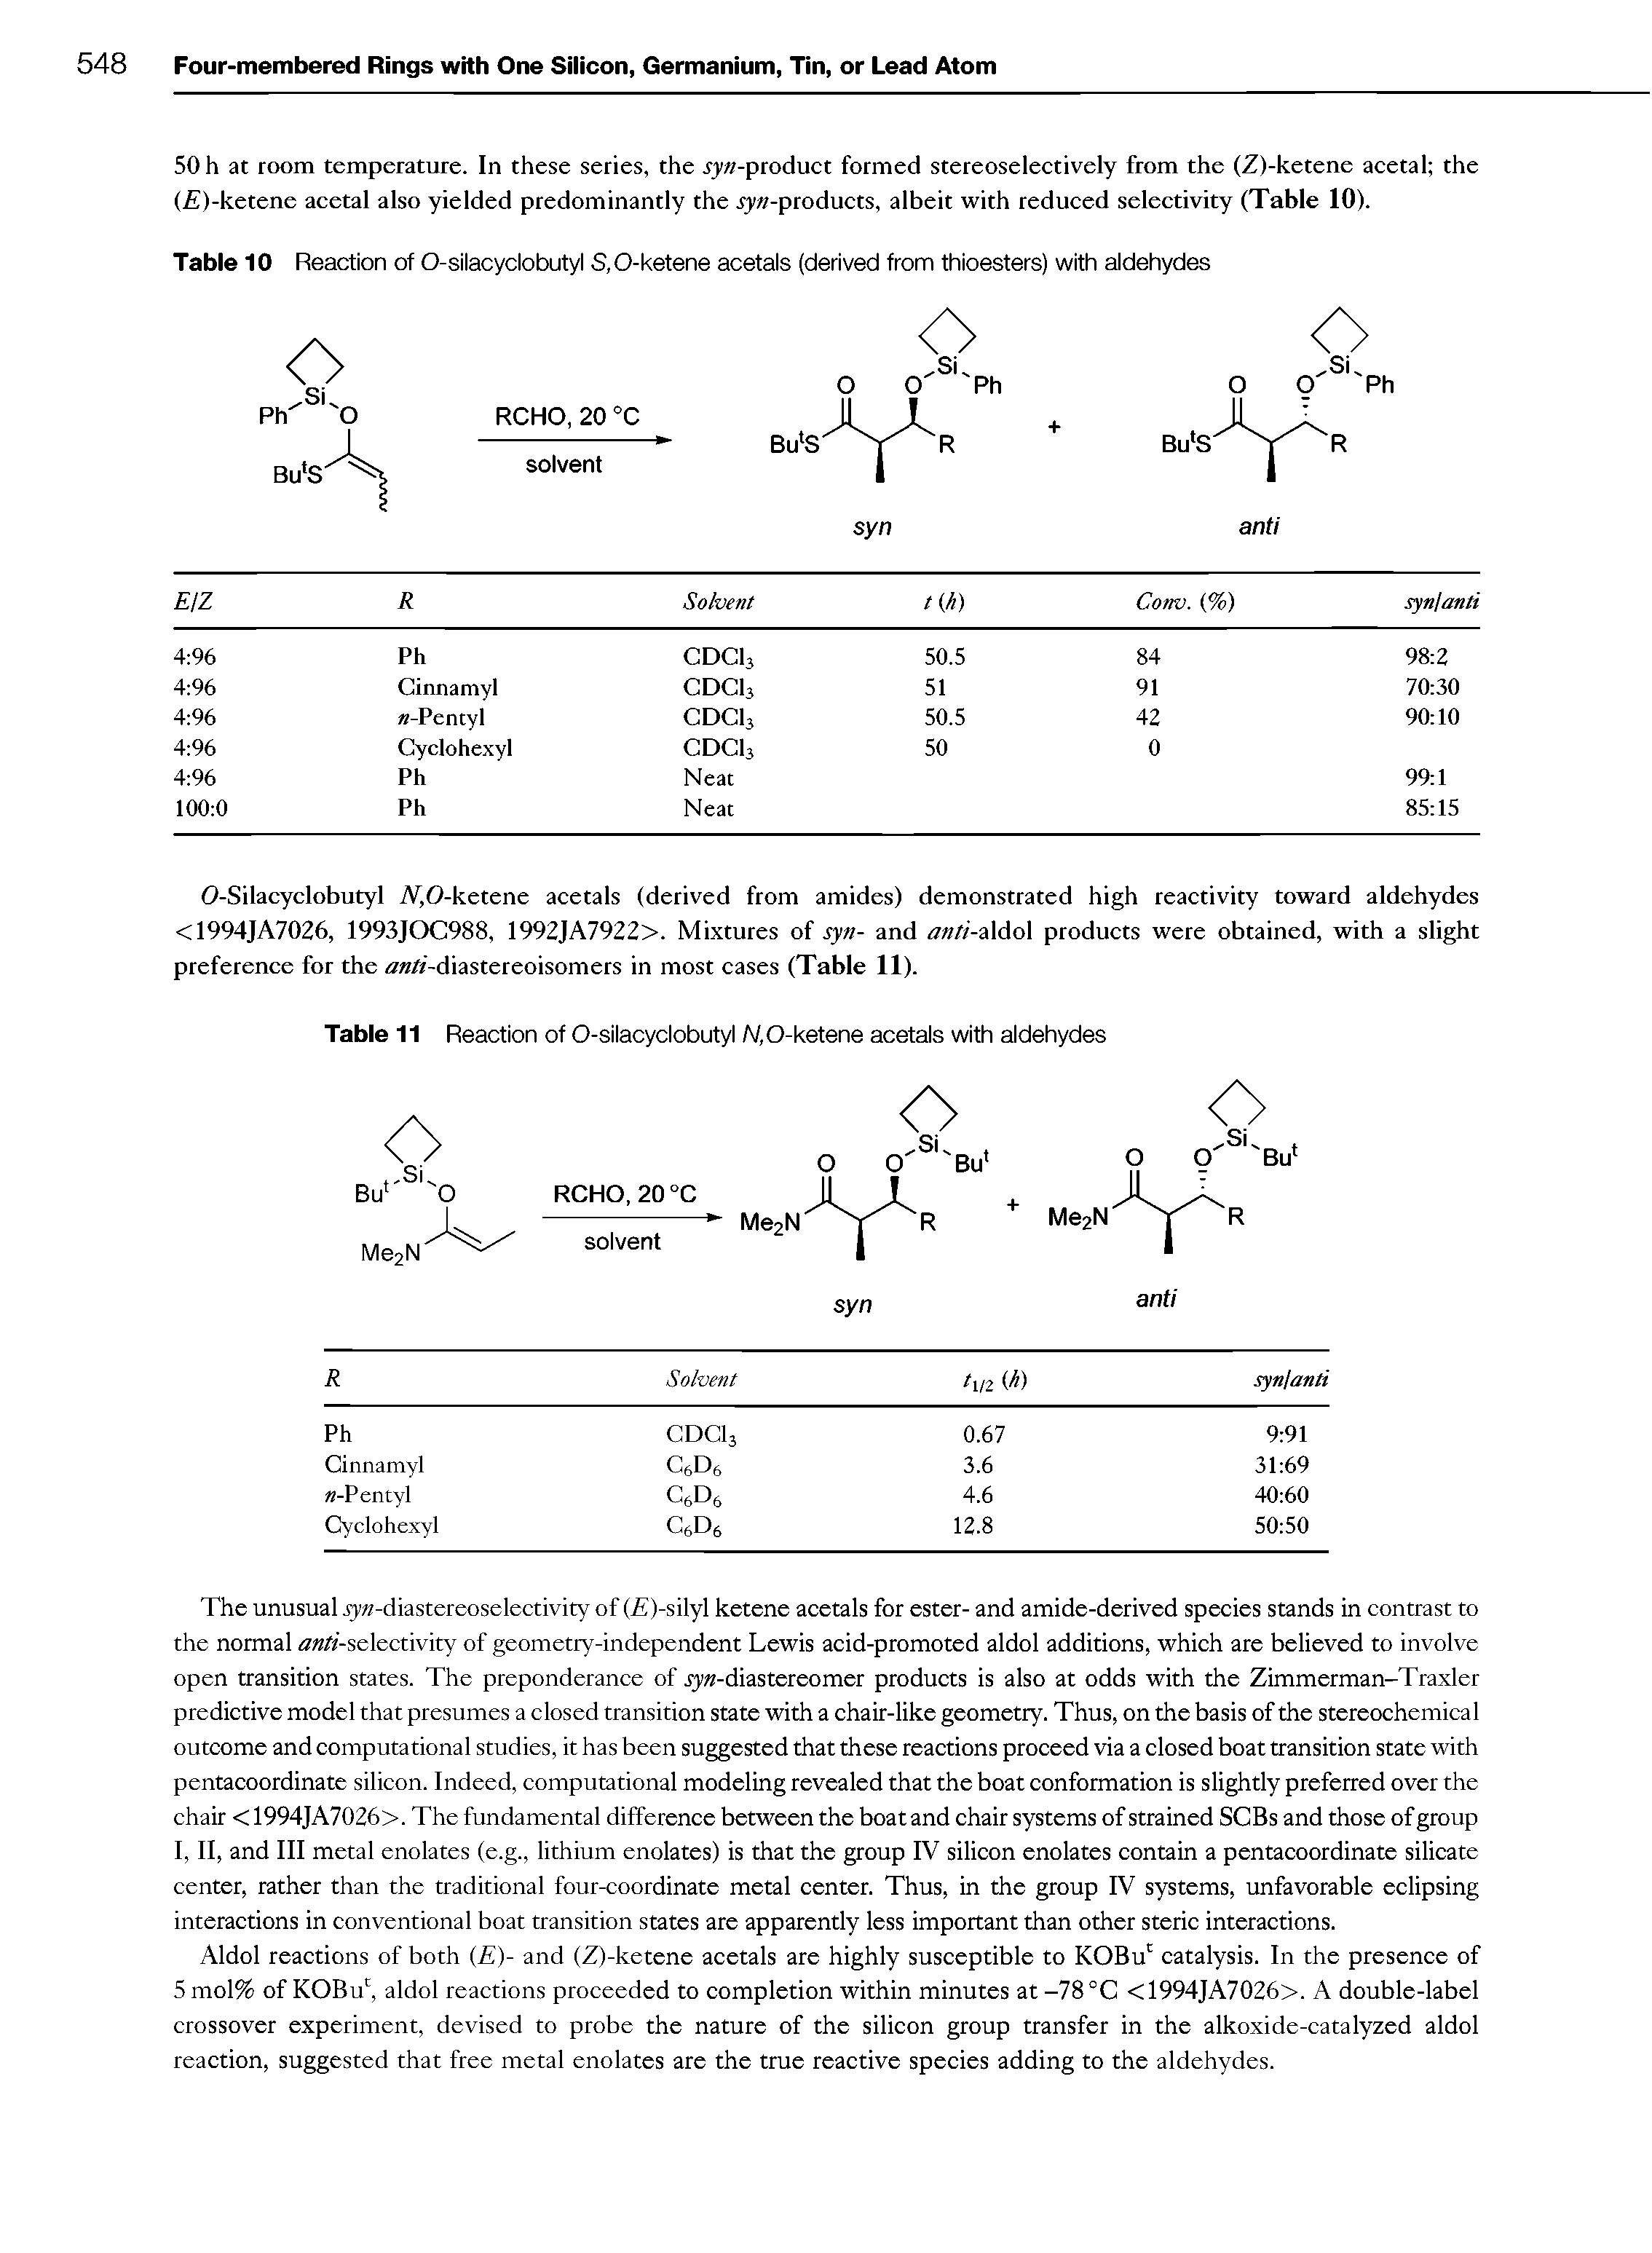 Table 11 Reaction of O-silacyclobutyl A/.O-ketene acetals with aldehydes...